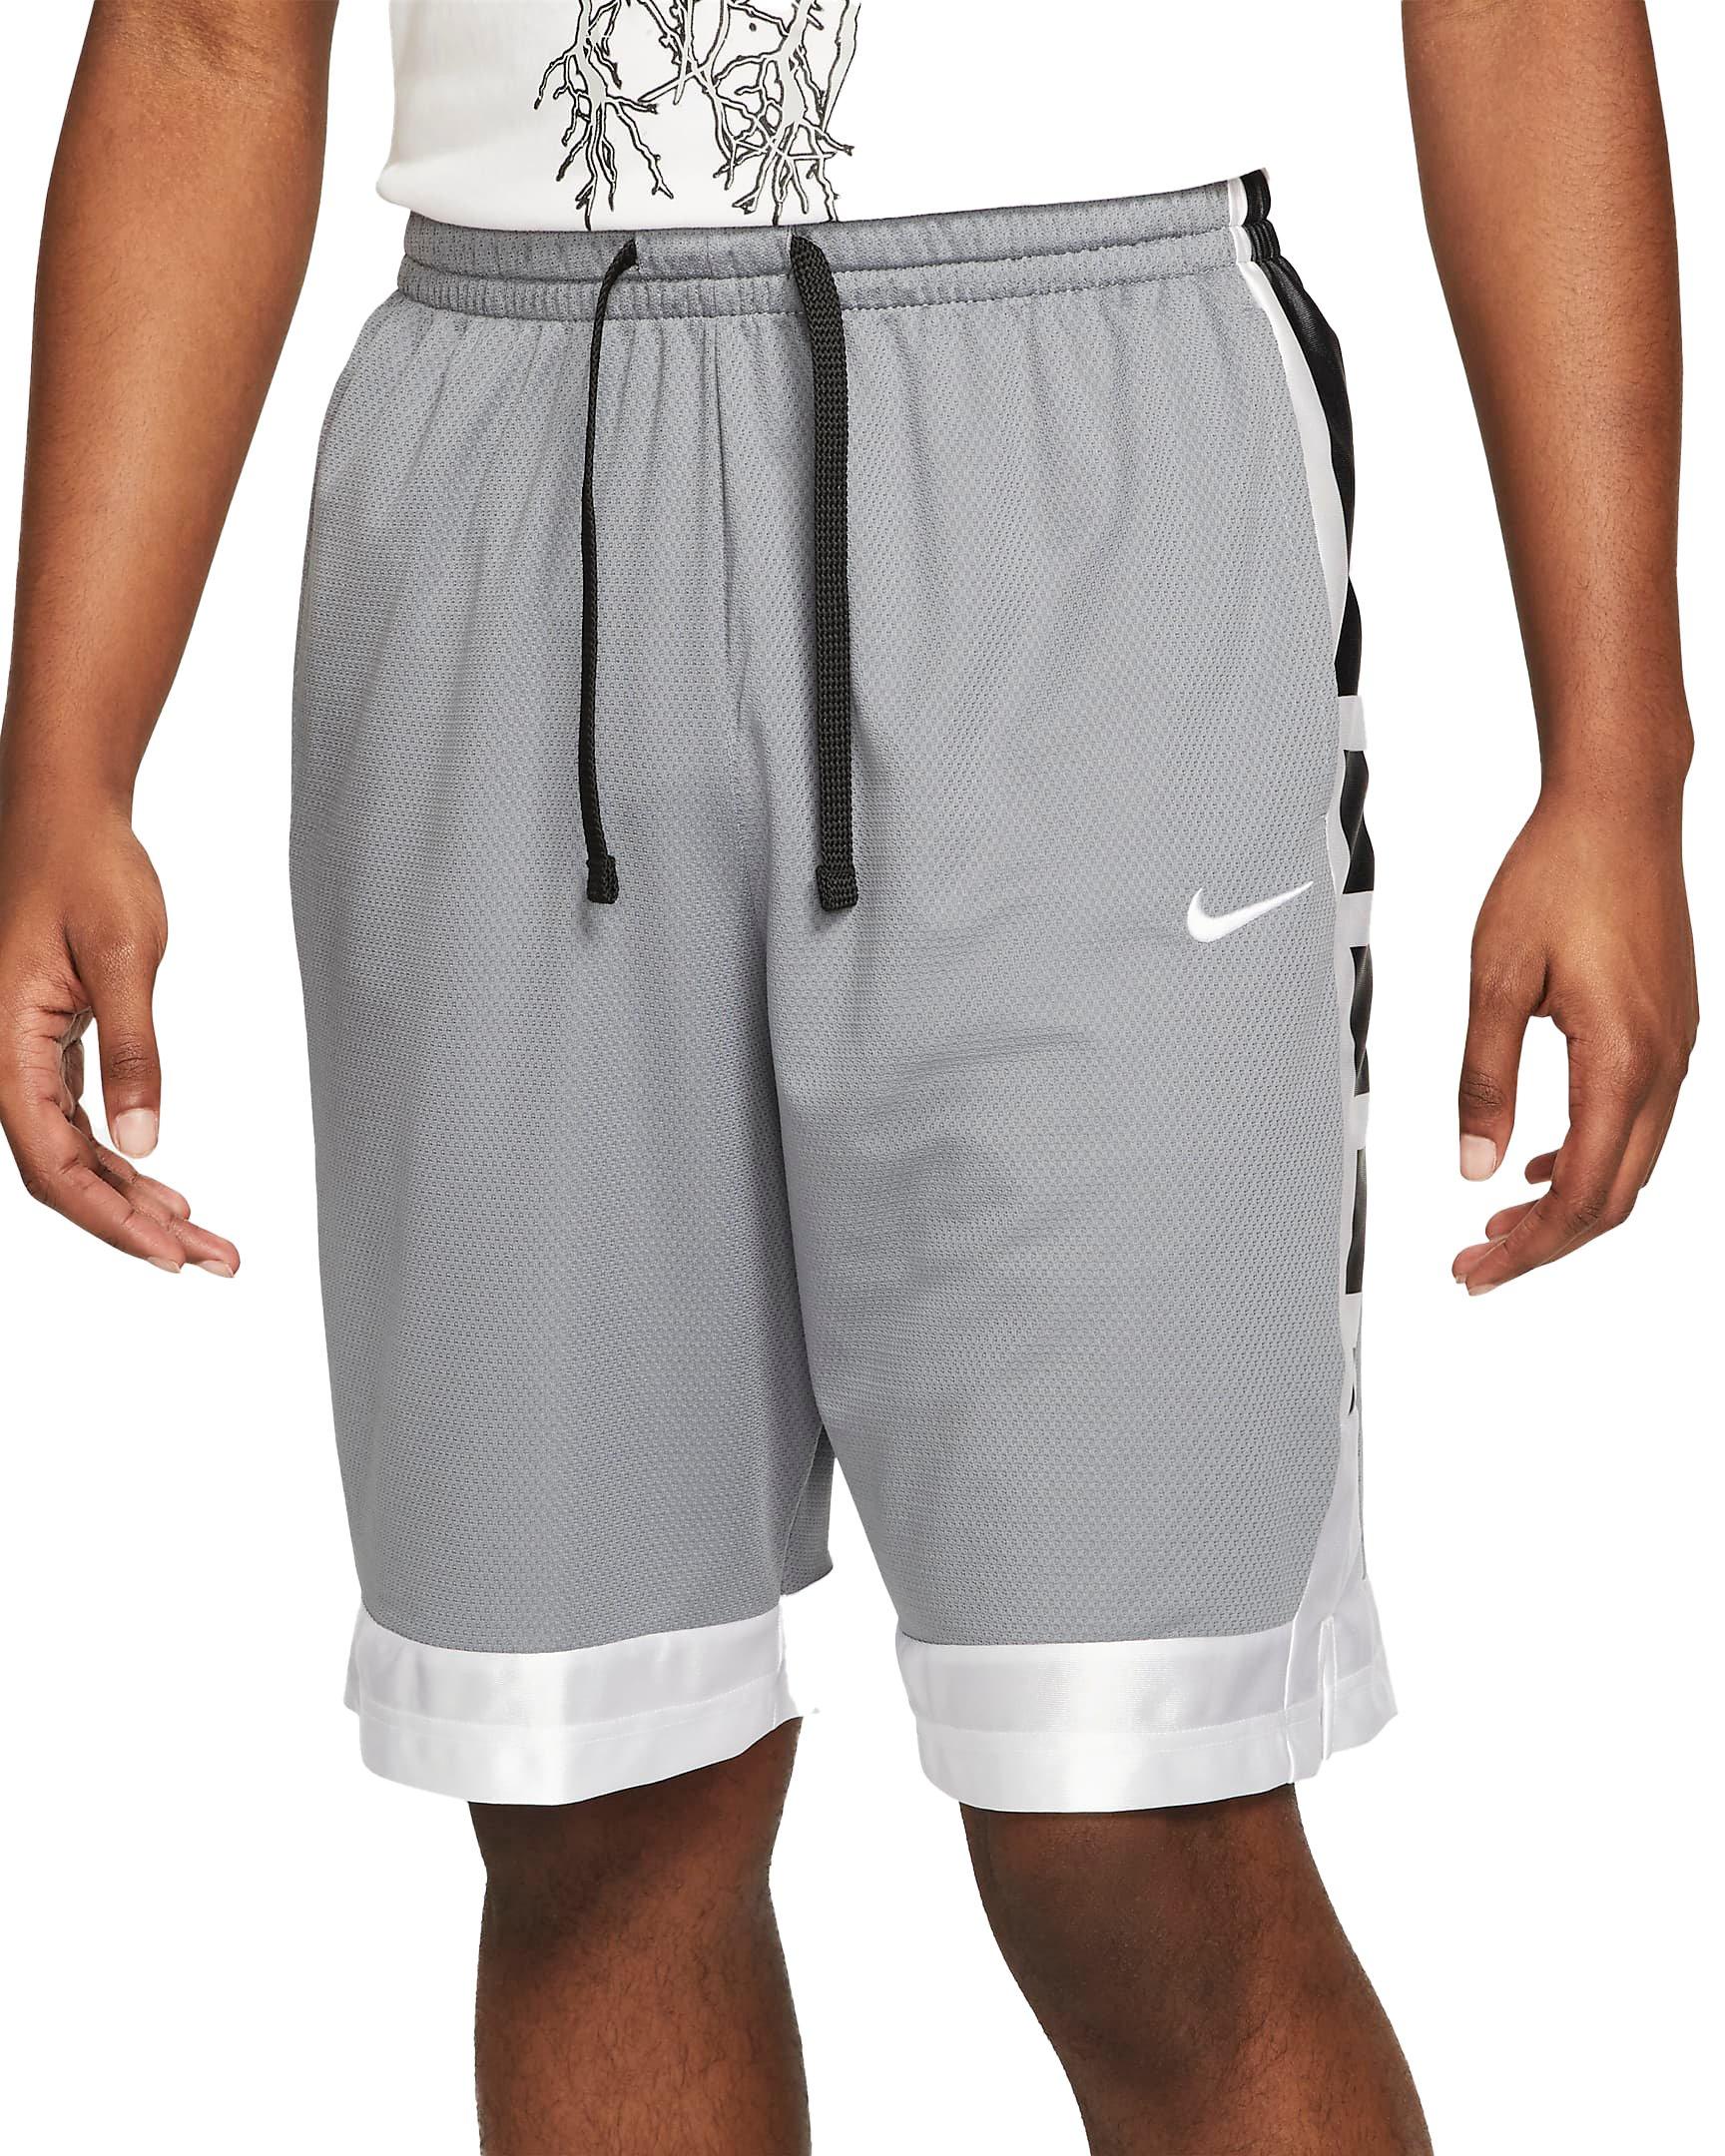 Nike Elite Women's Knit Basketball Shorts in White